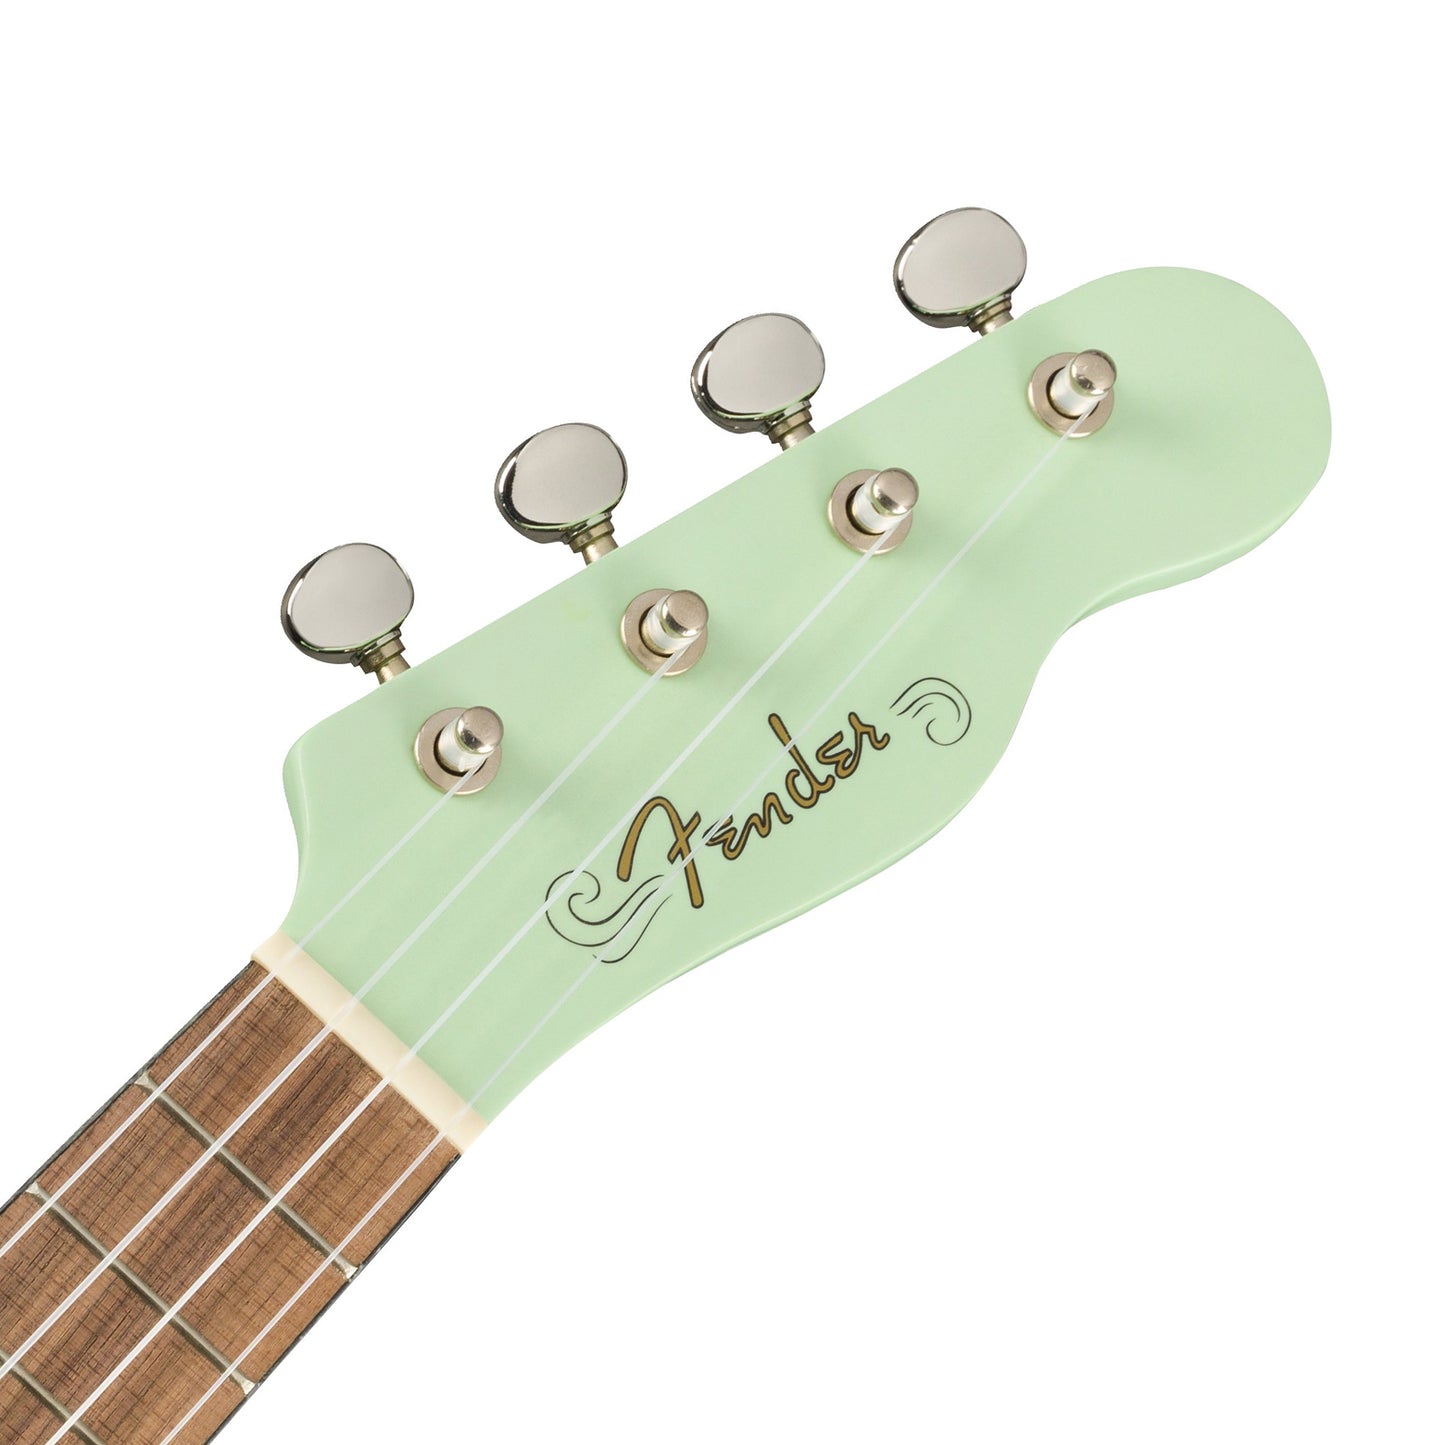 Fender Venice Soprano Ukulele 4 String Guitar with 12 Frets, Chrome Finish, C Shaped Neck (Blue, Pink, Green, Black, Natural, Cherry)